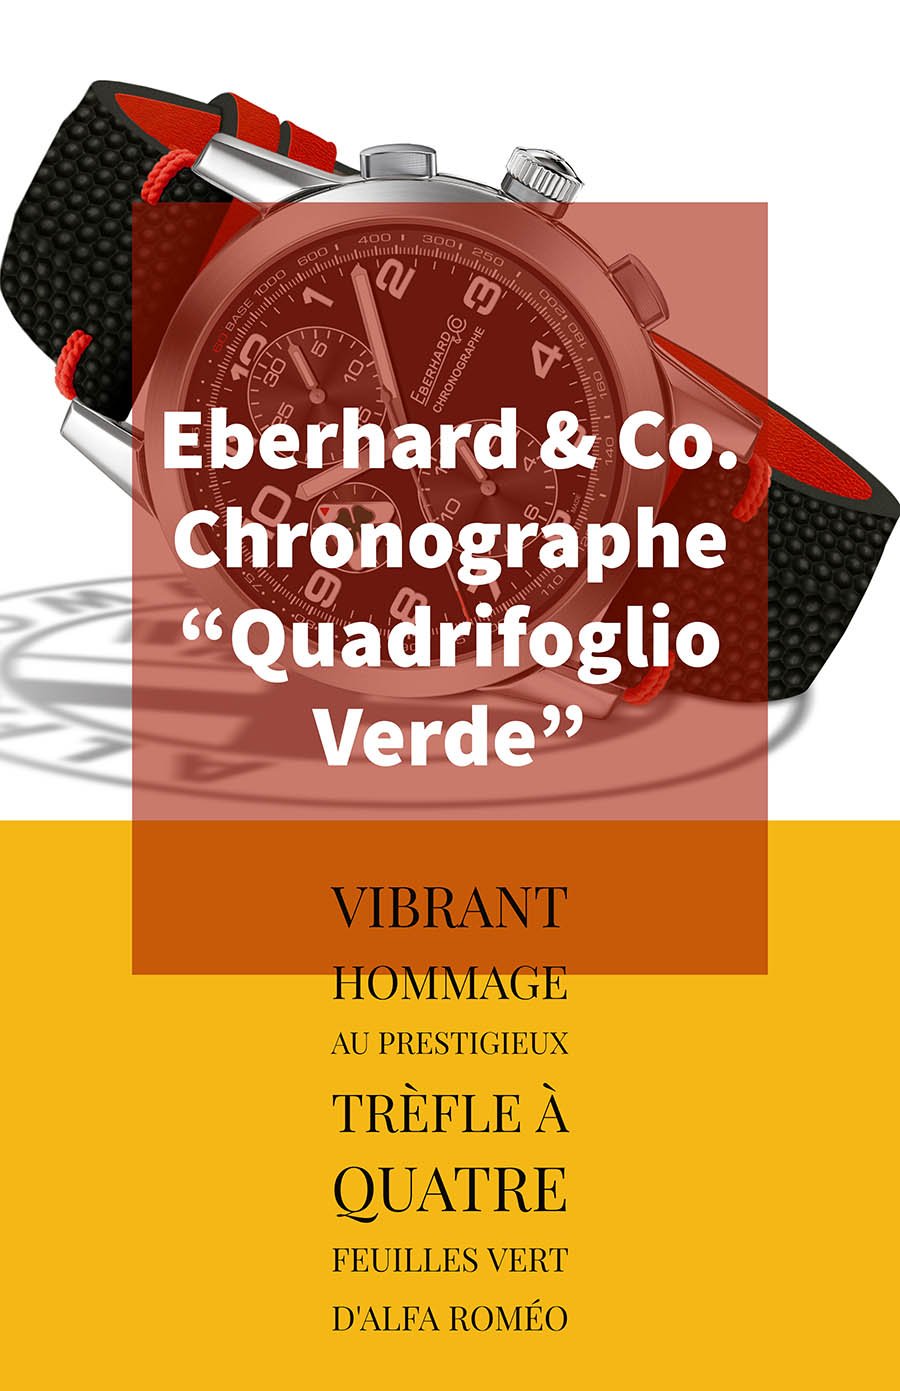 Eberhard & Co - Chronographe Quadrifoglio Verde